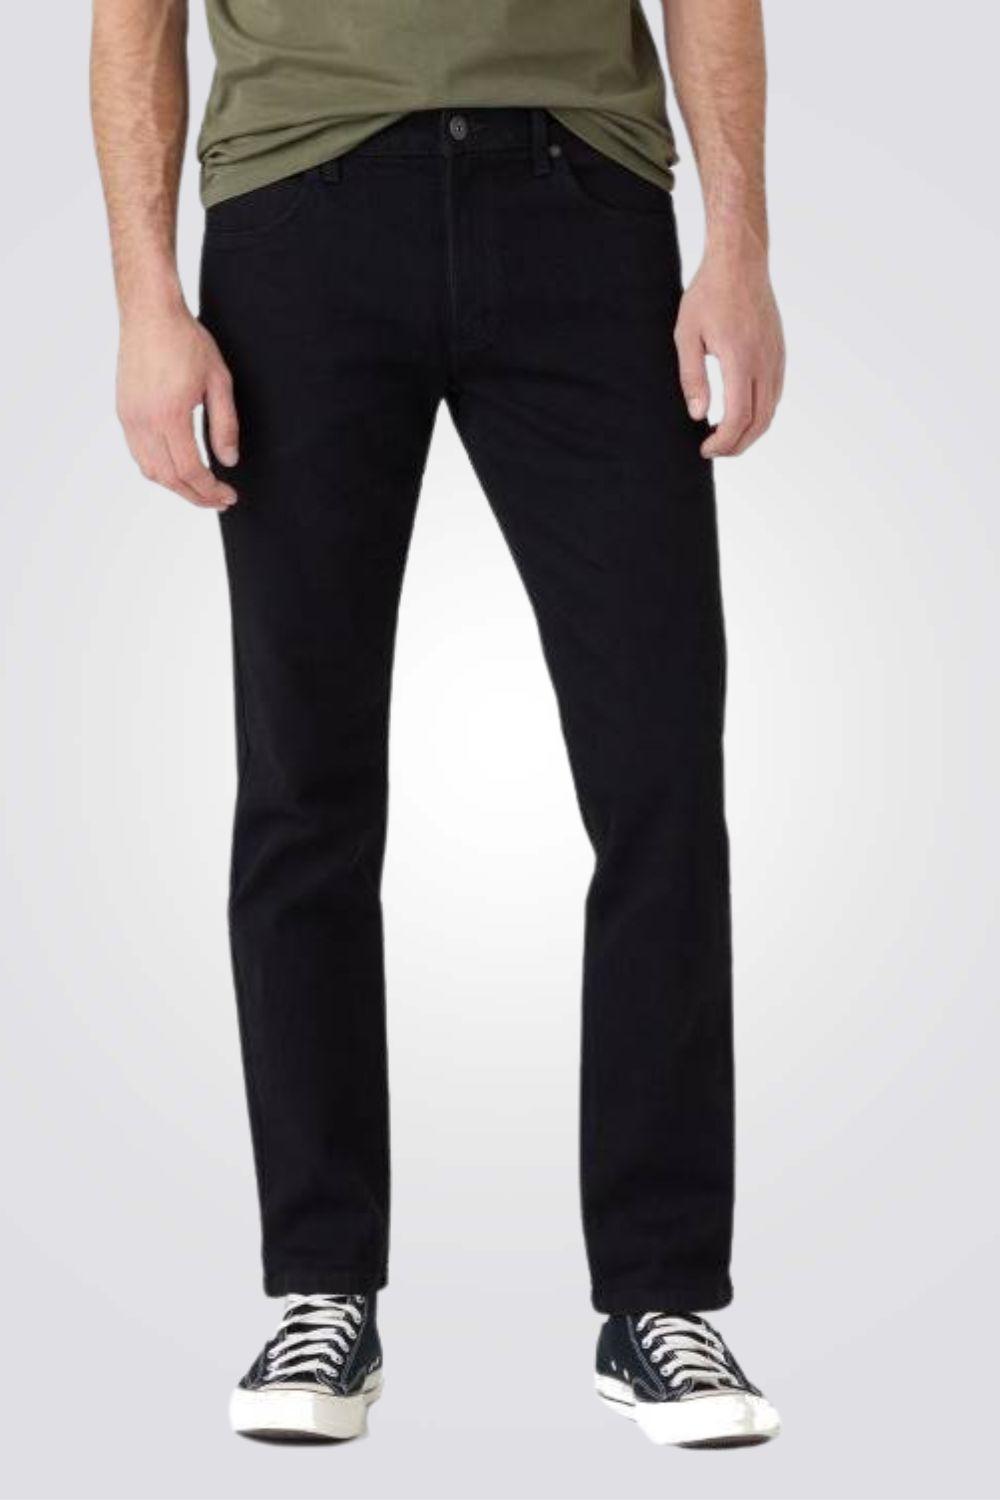 WRANGLER - ג'ינס BLACK RINSE -SLIM צבע שחור - MASHBIR//365